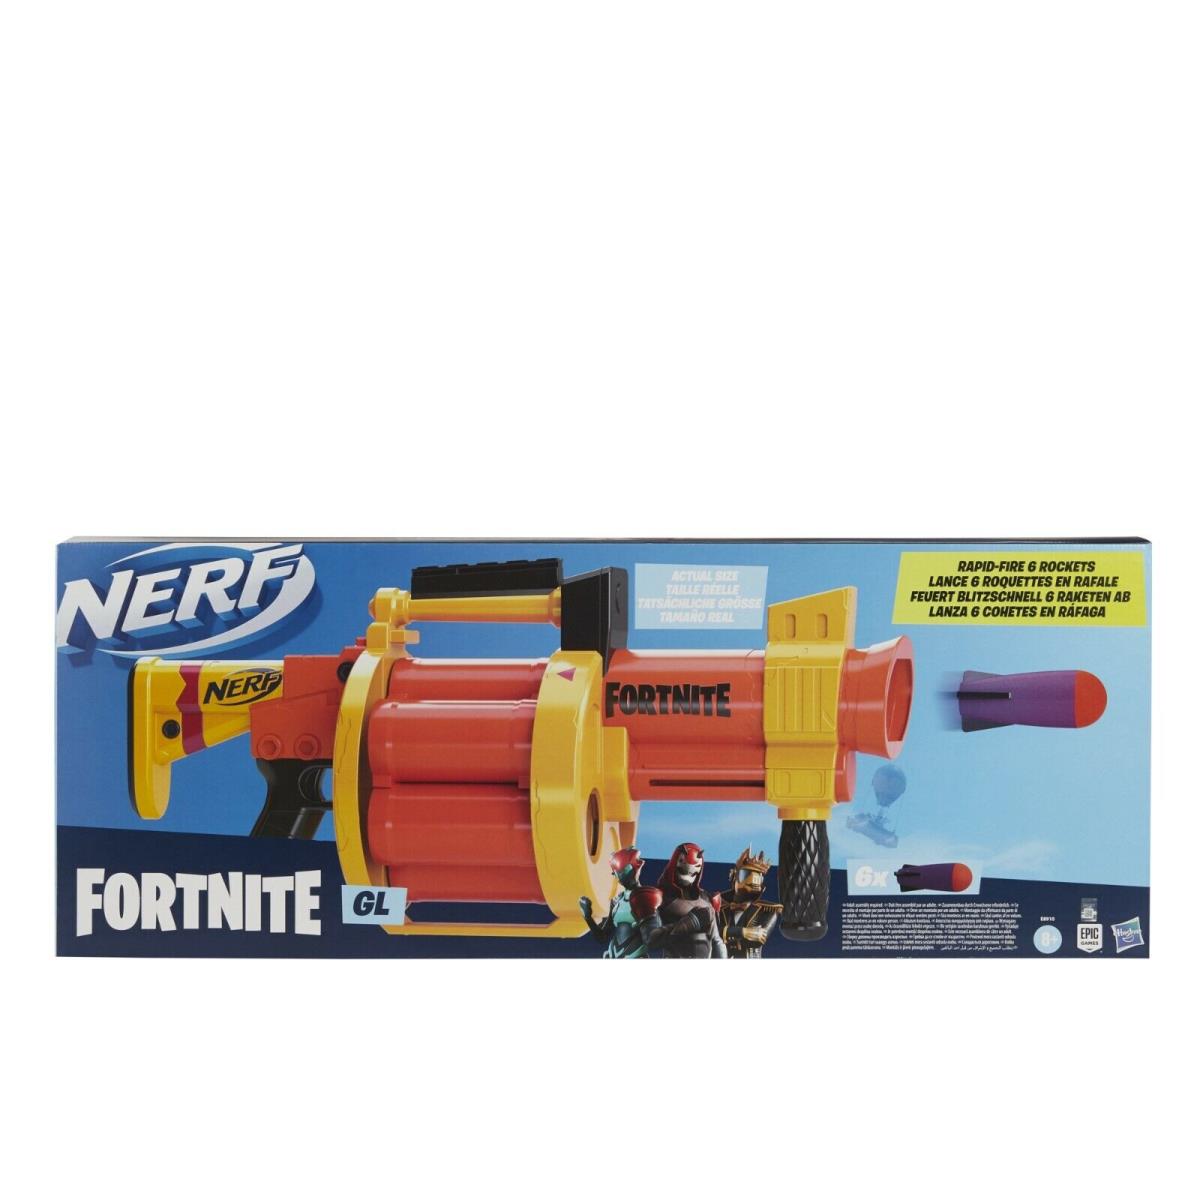 Nerf Fortnite GL Blaster Includes 6 Official Nerf Darts